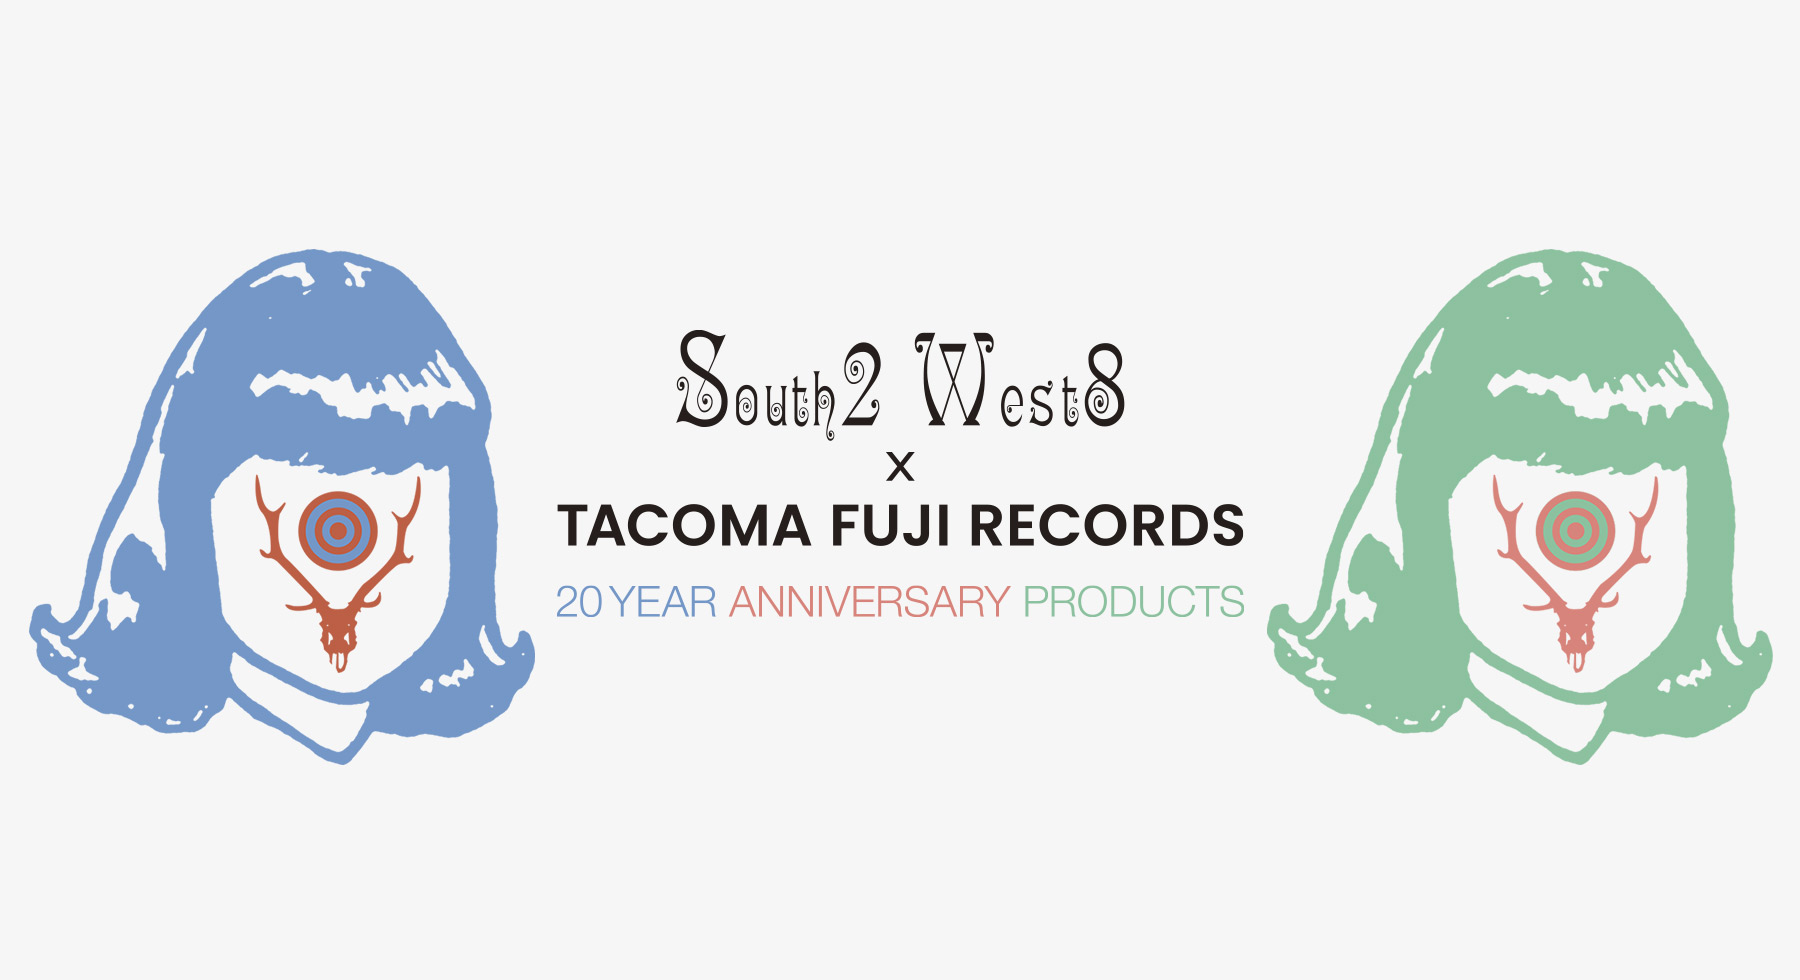 〈SOUTH2 WEST8〉x〈TACOMA FUJI RECORDS〉